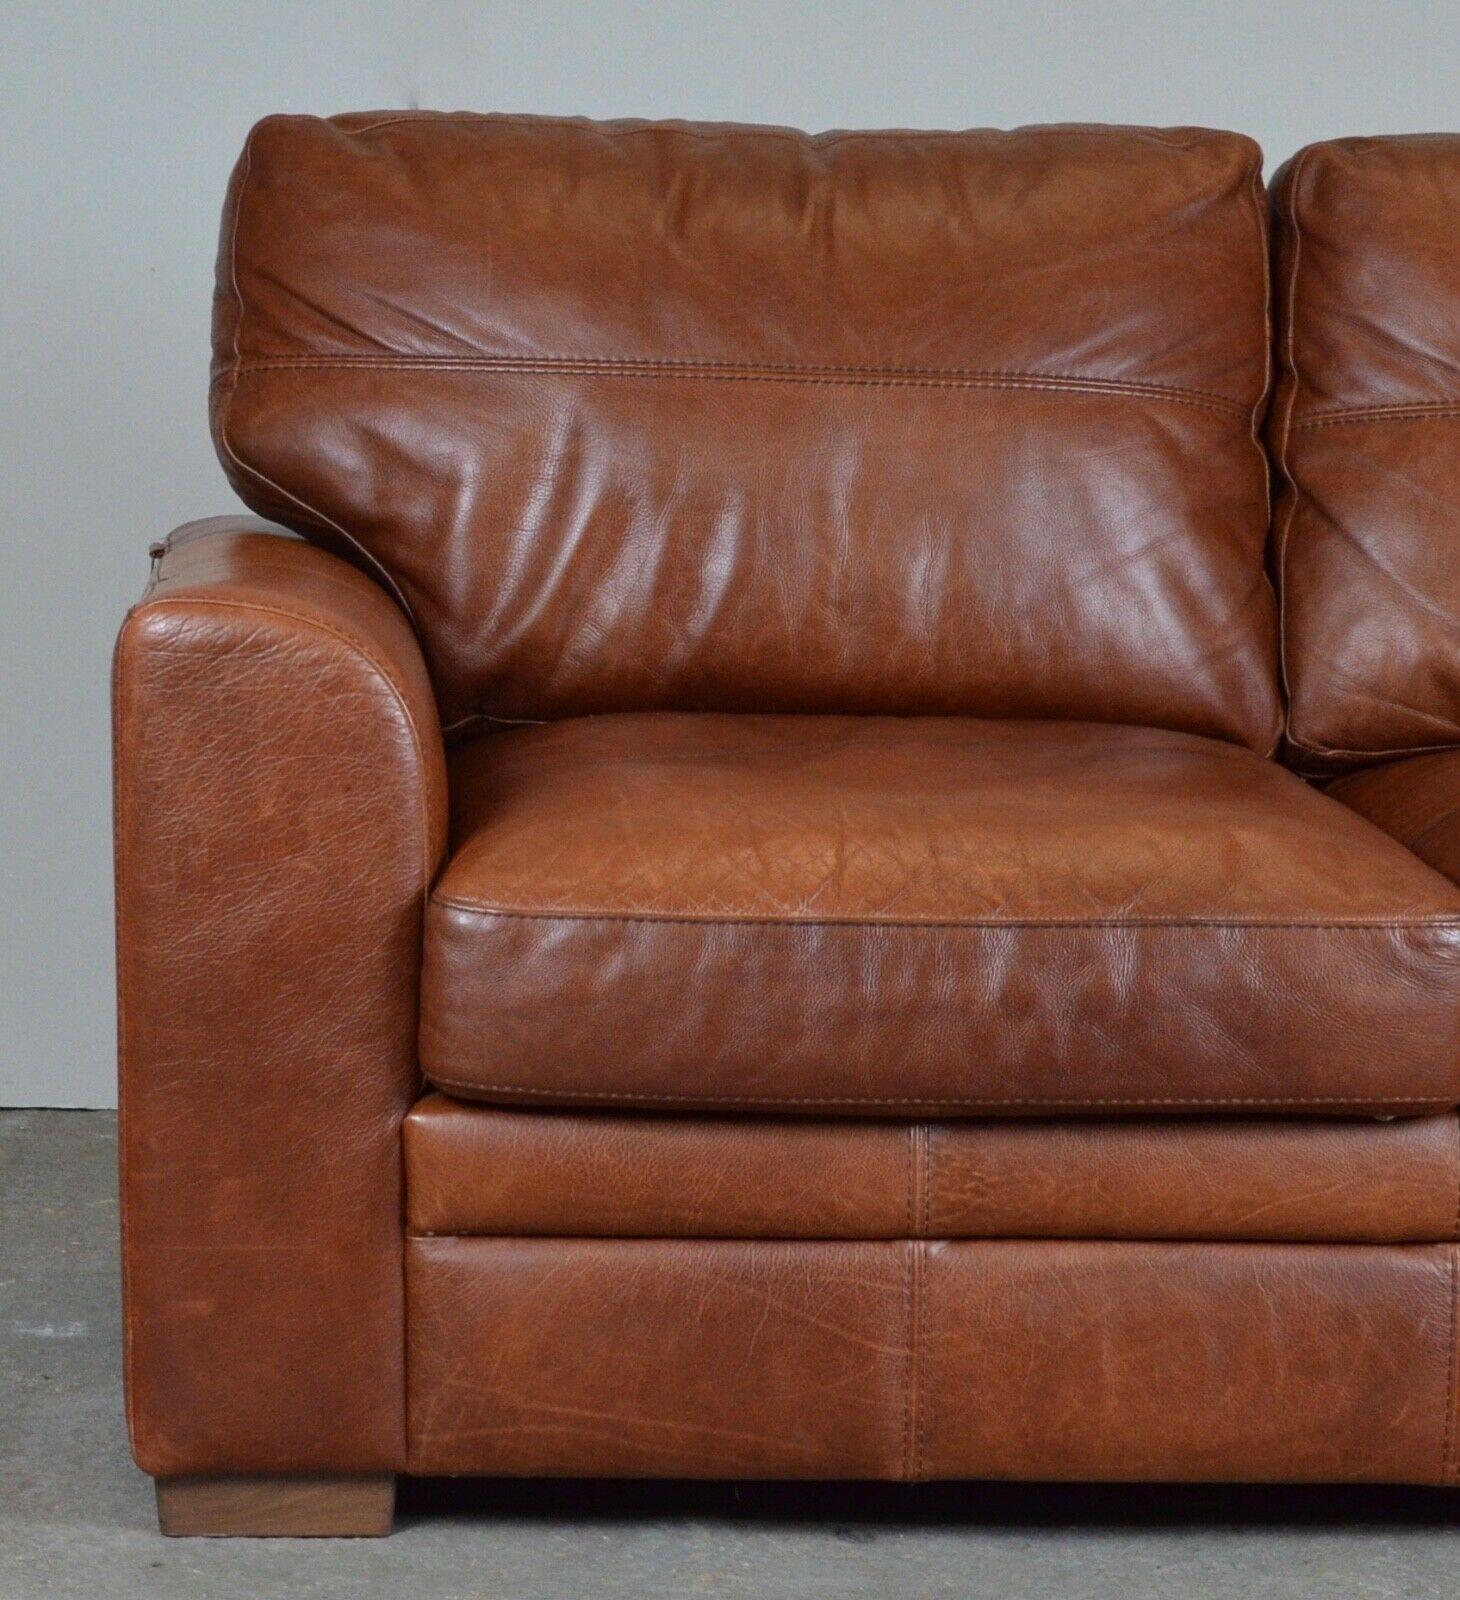 Hand-Crafted Luxury 2 Seater Viva Italian Designer Tan Leather Sofa / Armchair Available